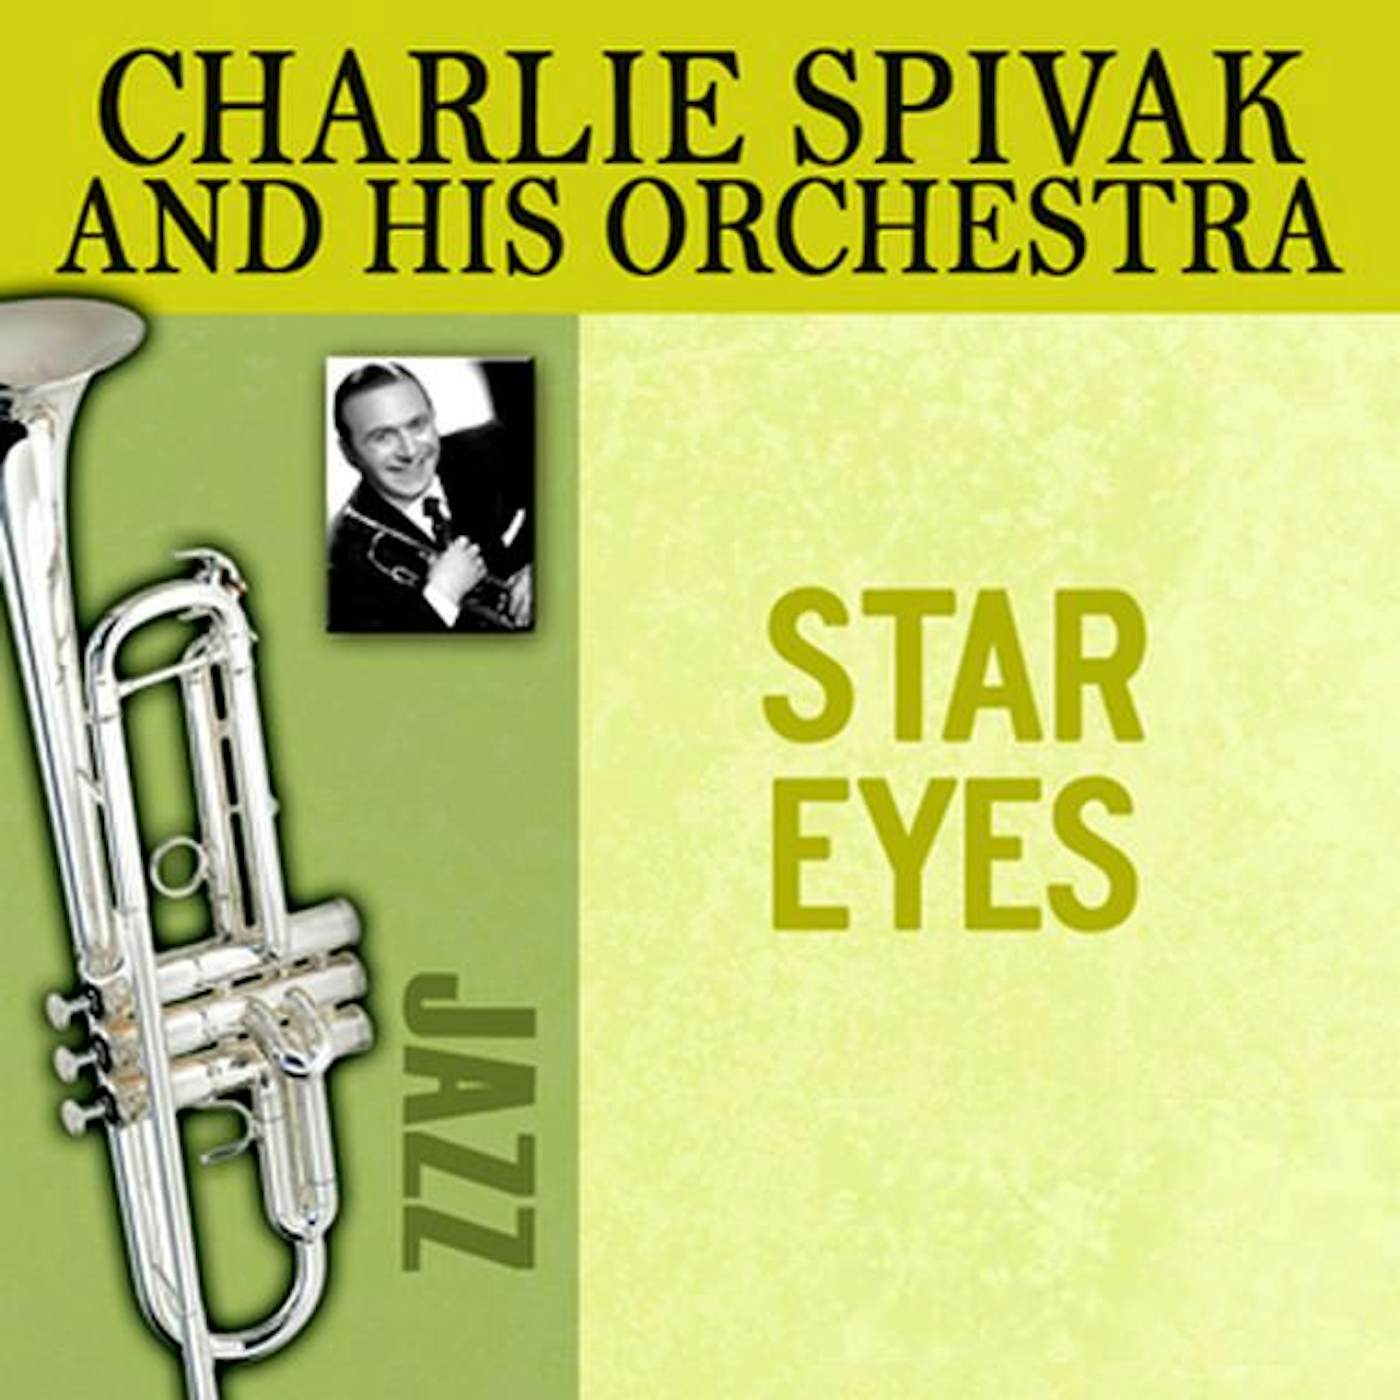 Charlie Spivak